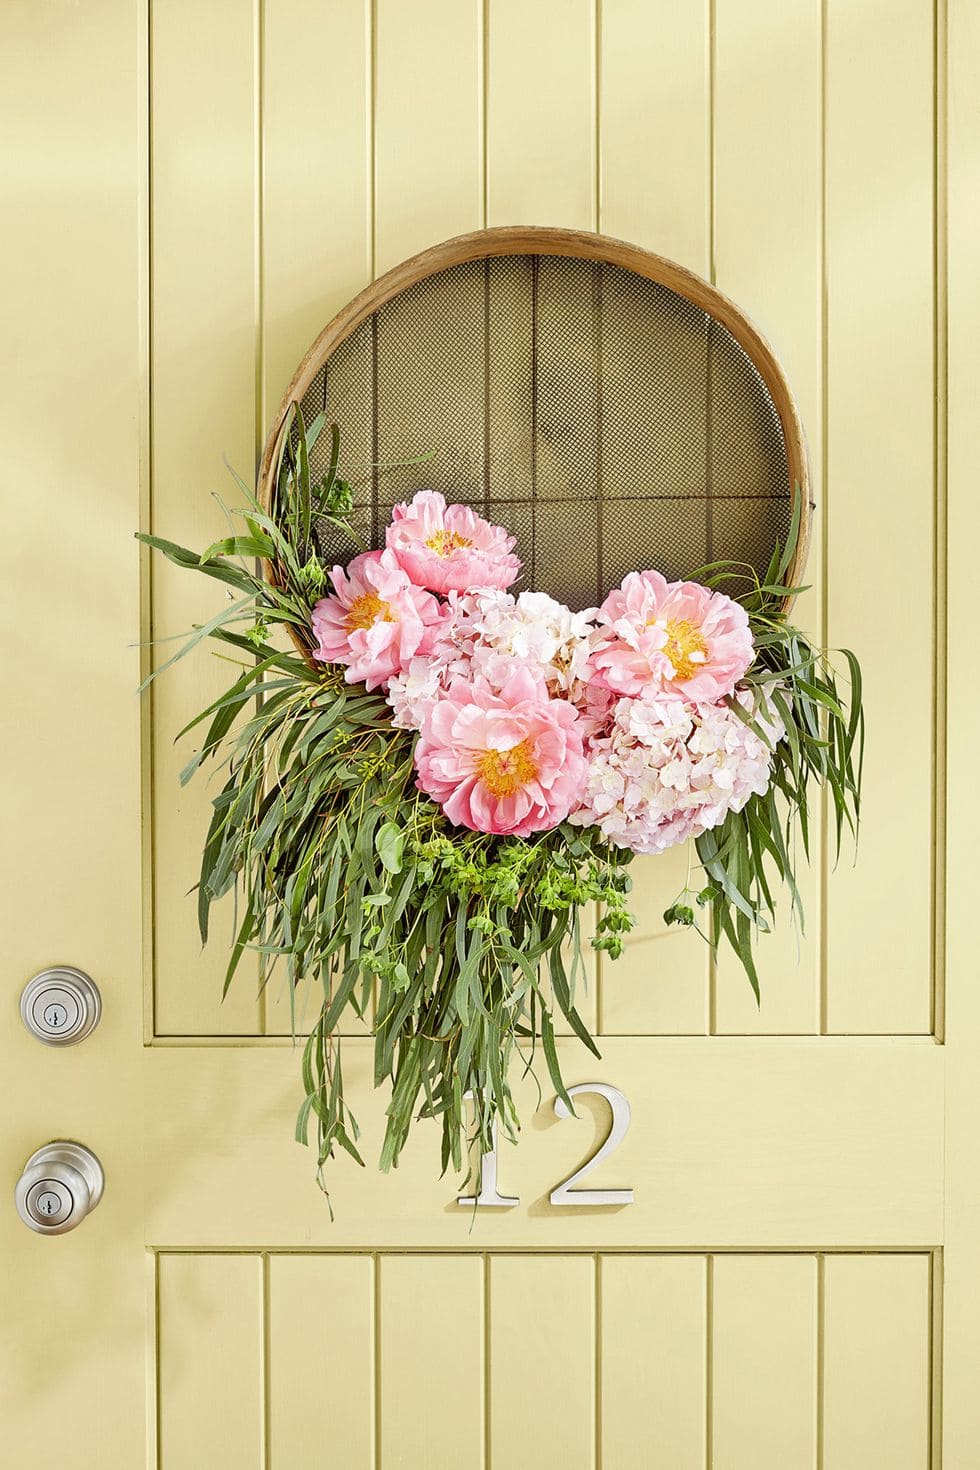 20 adorable DIY summer wreath ideas to liven up your front door